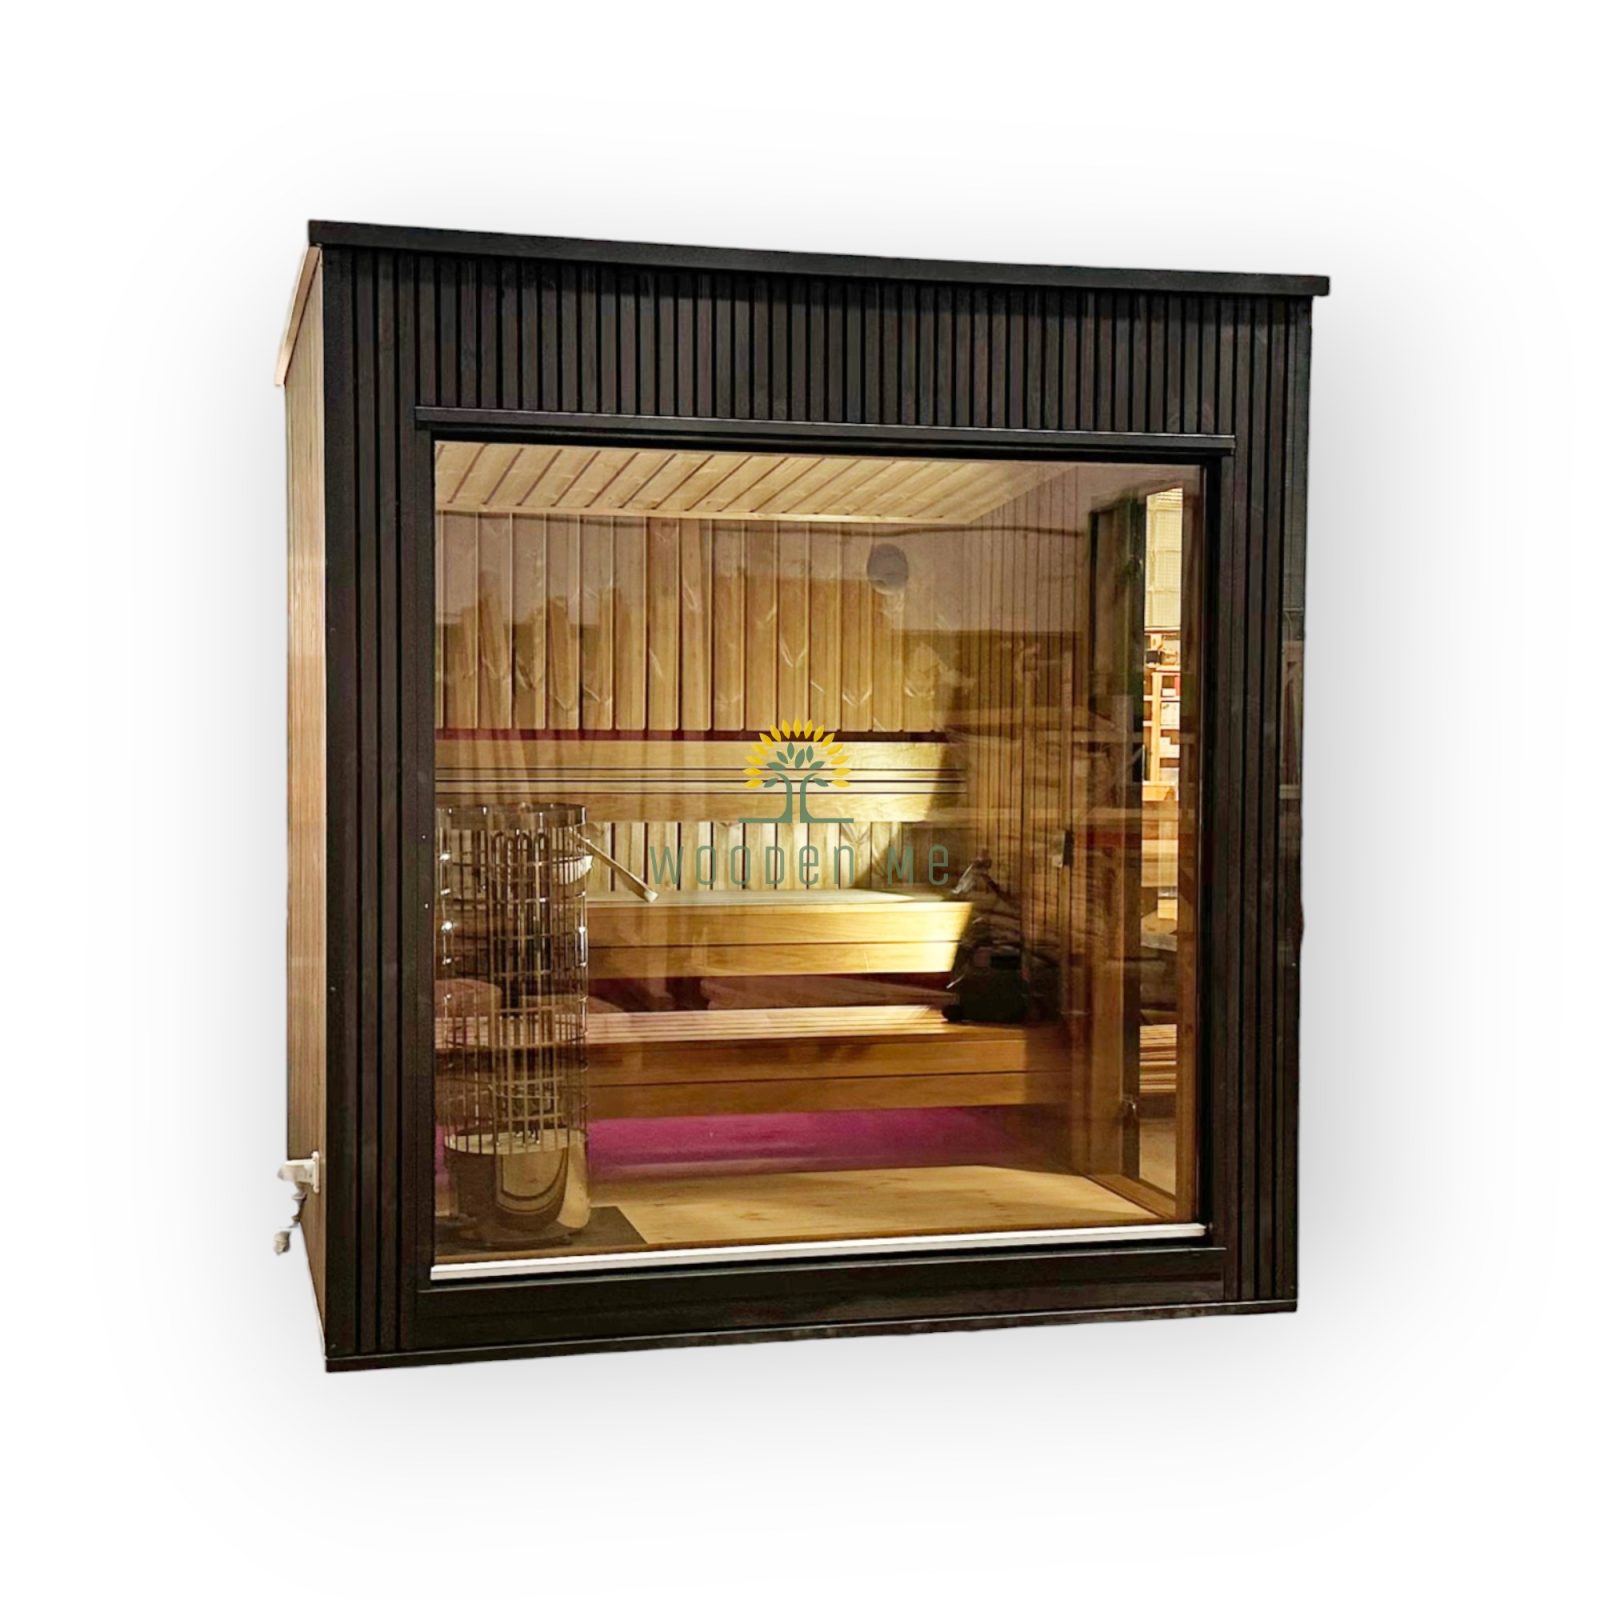 Luxury sauna 2.3 m x 2.3